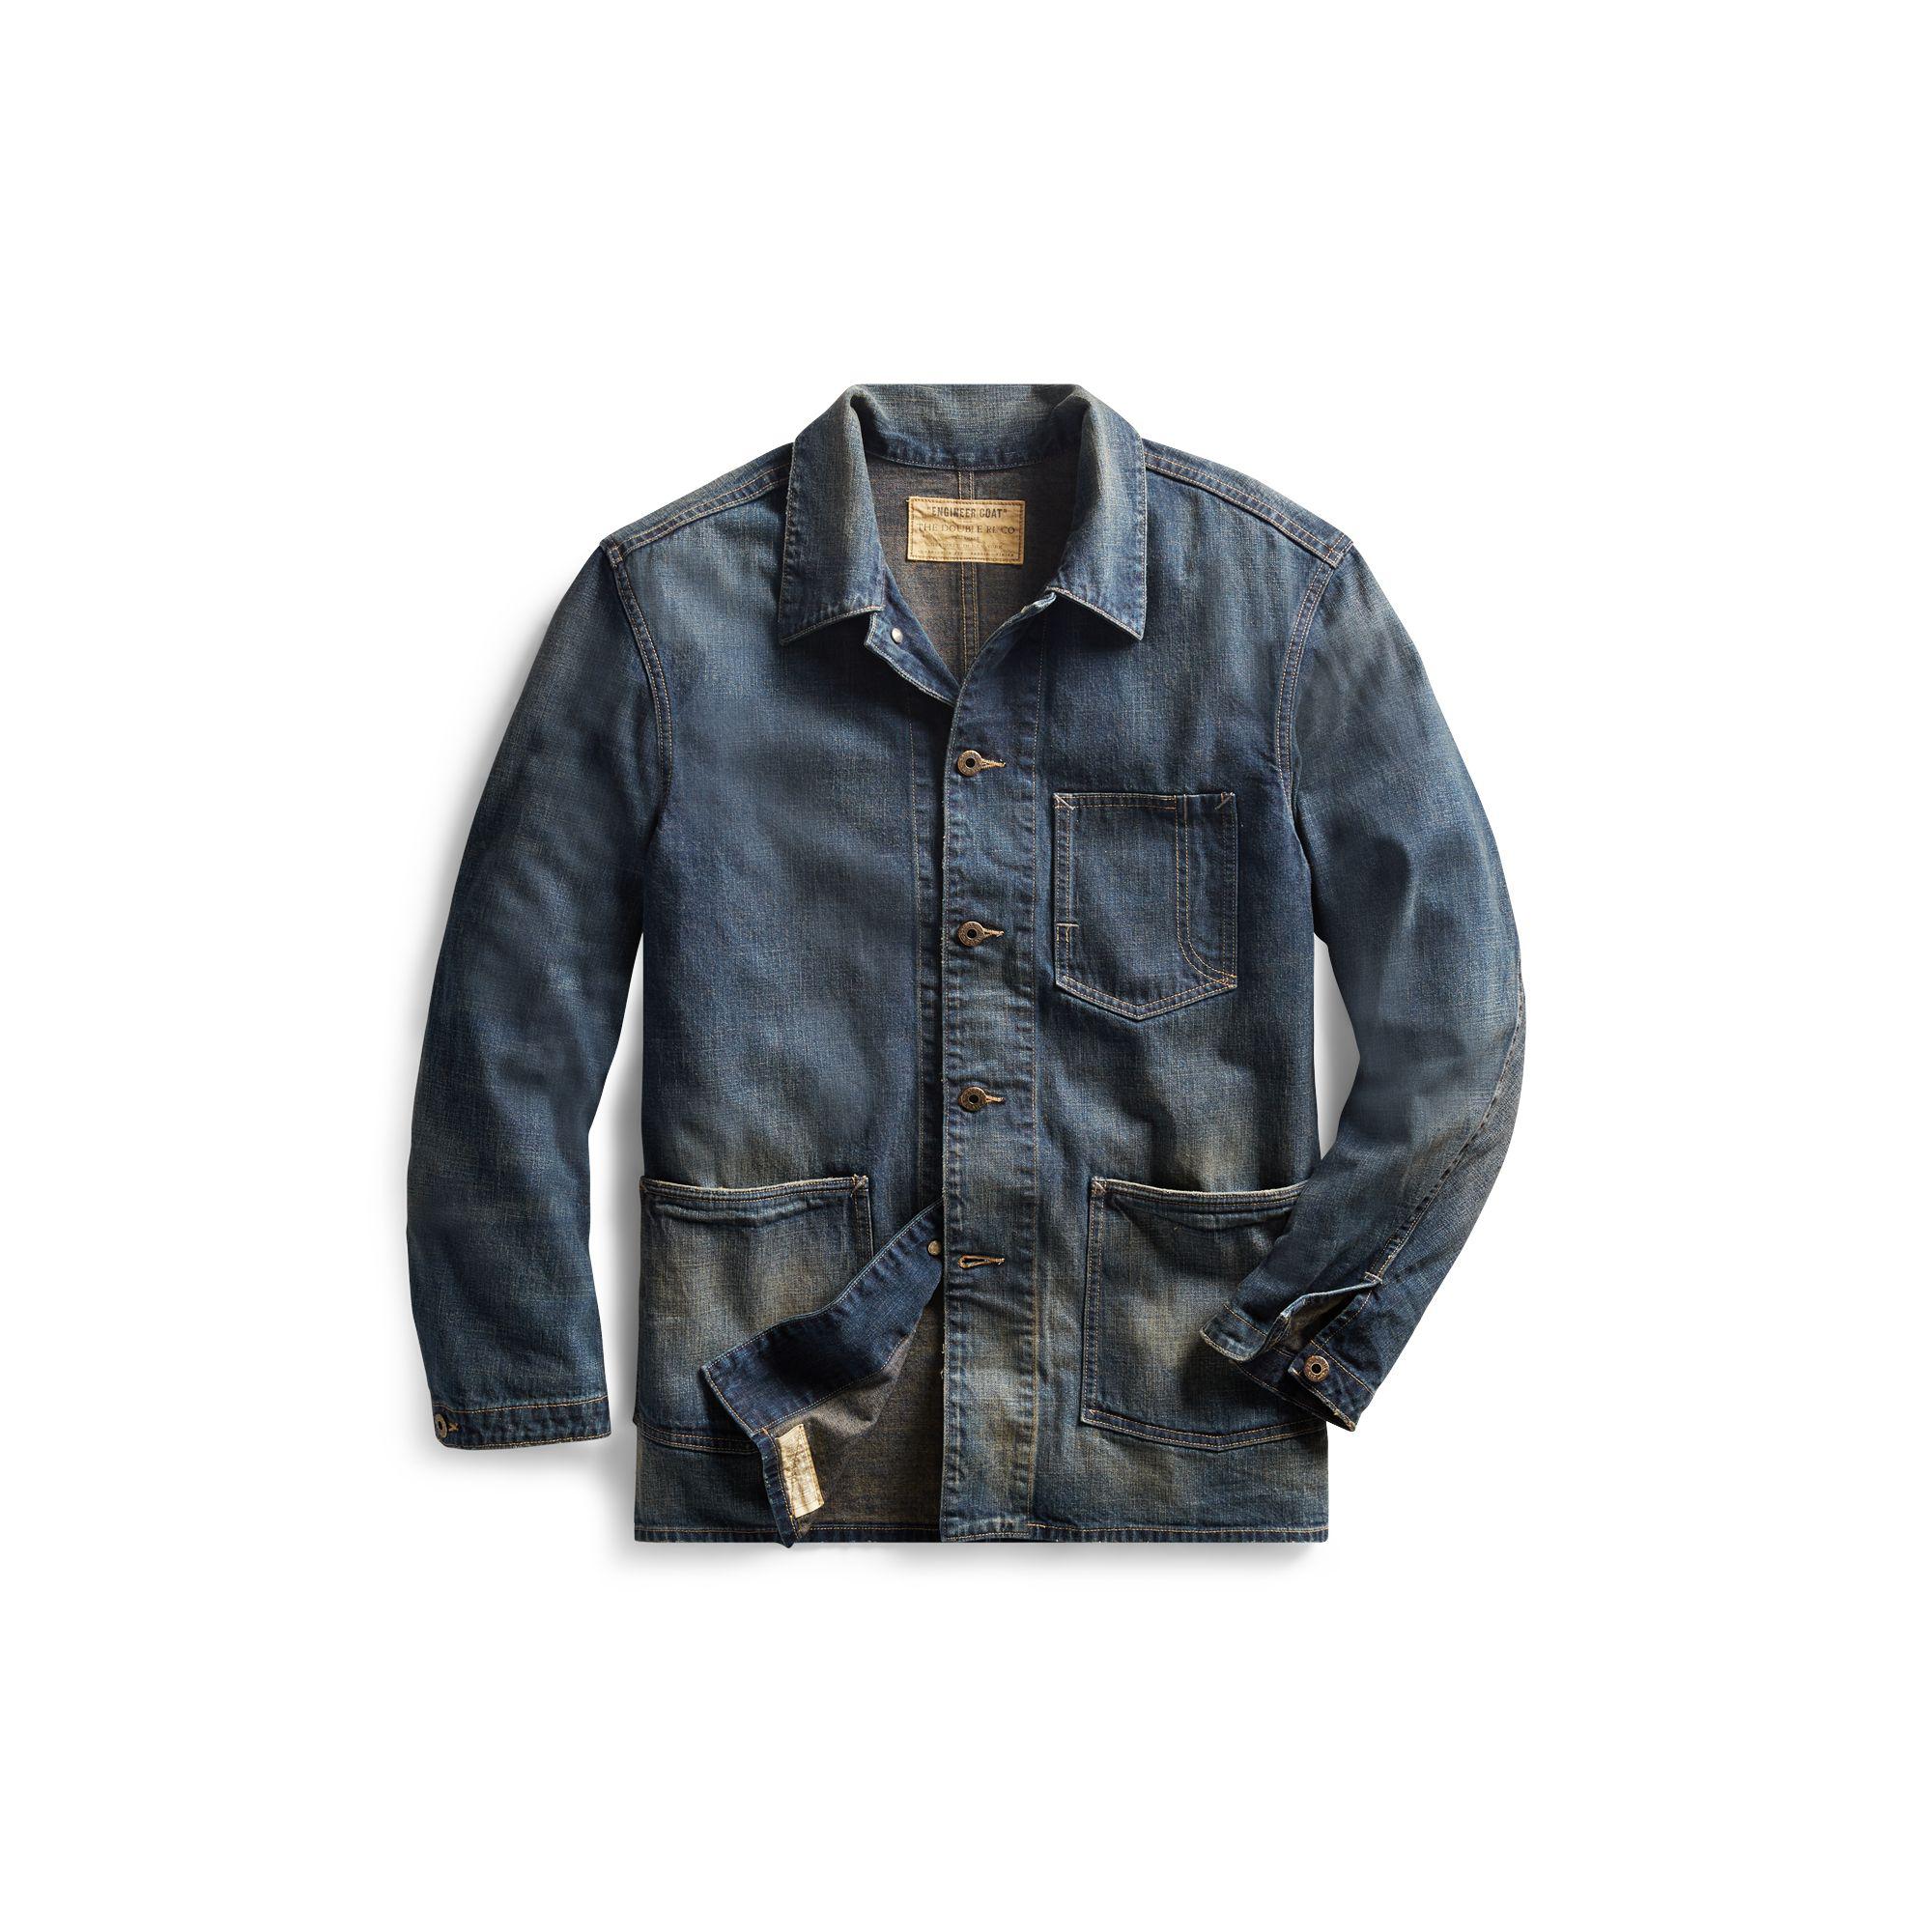 RRL Indigo Denim Chore Jacket in Blue for Men - Lyst